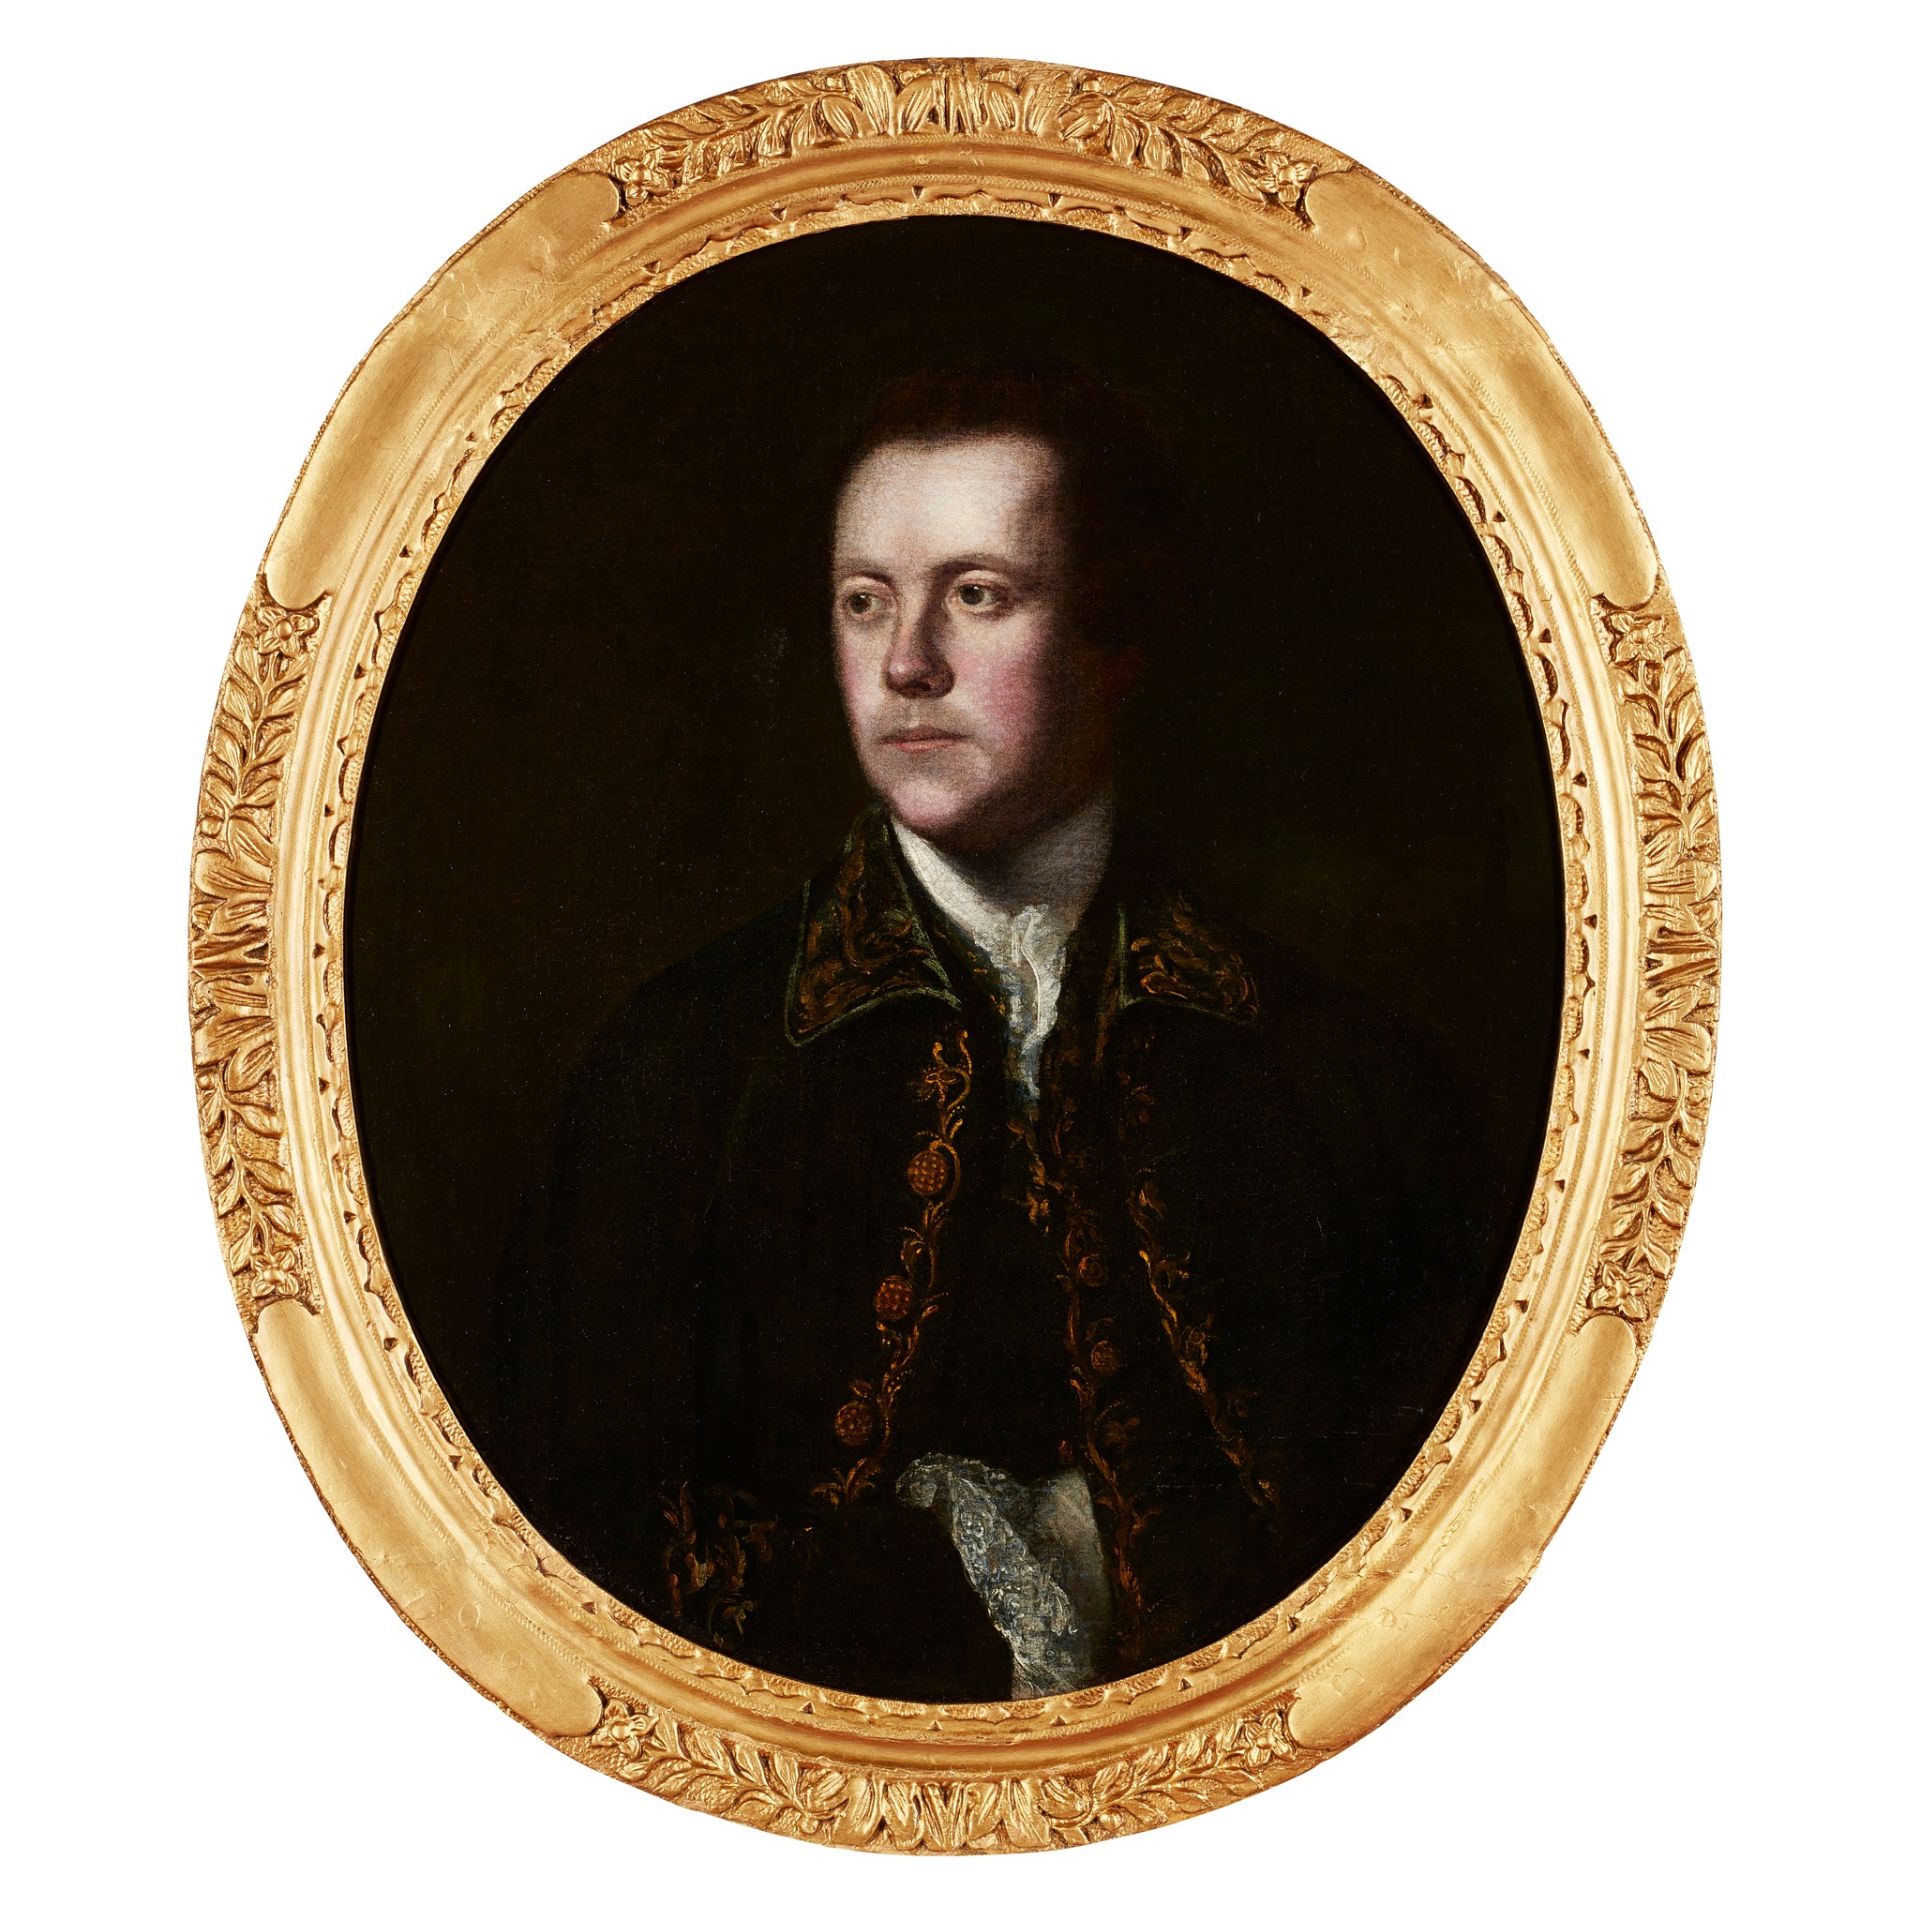 SIR JOSHUA REYNOLDS P.R.A., F.R.S., F.R.S.A. (BRITISH 1723-1792) PORTRAIT OF RICHARD MERTON OF BATH